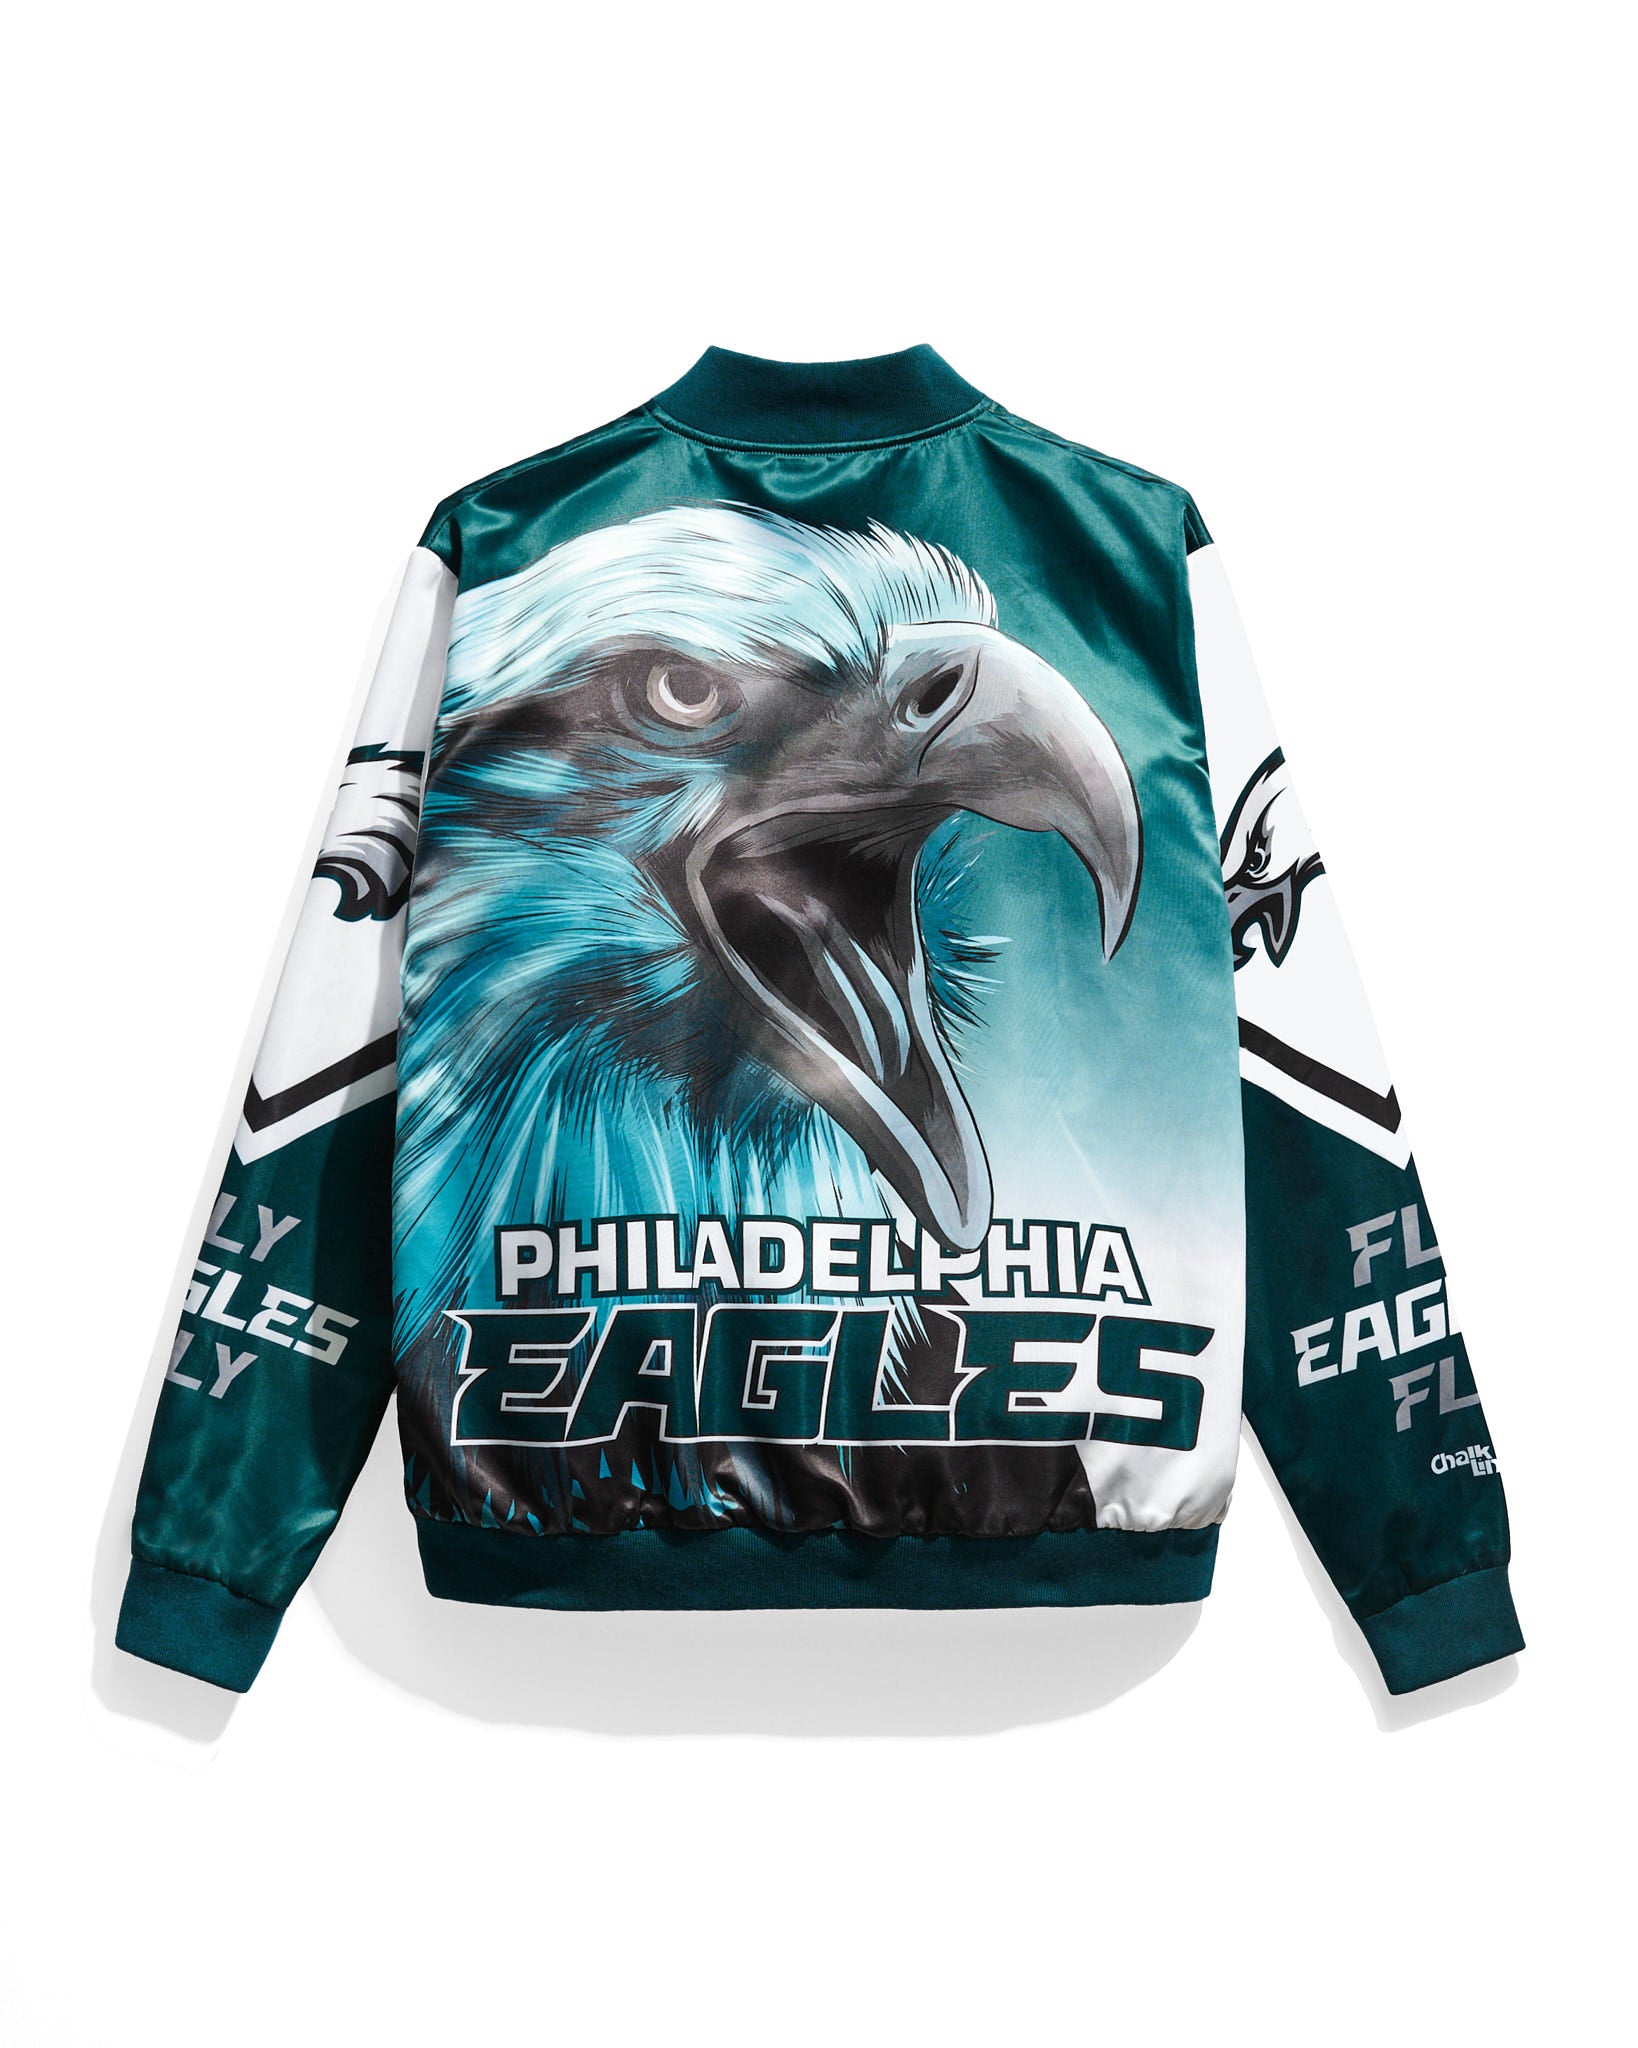 Philadelphia Eagles Apparel  Jerseys, Shirts, Hoodies, Jackets